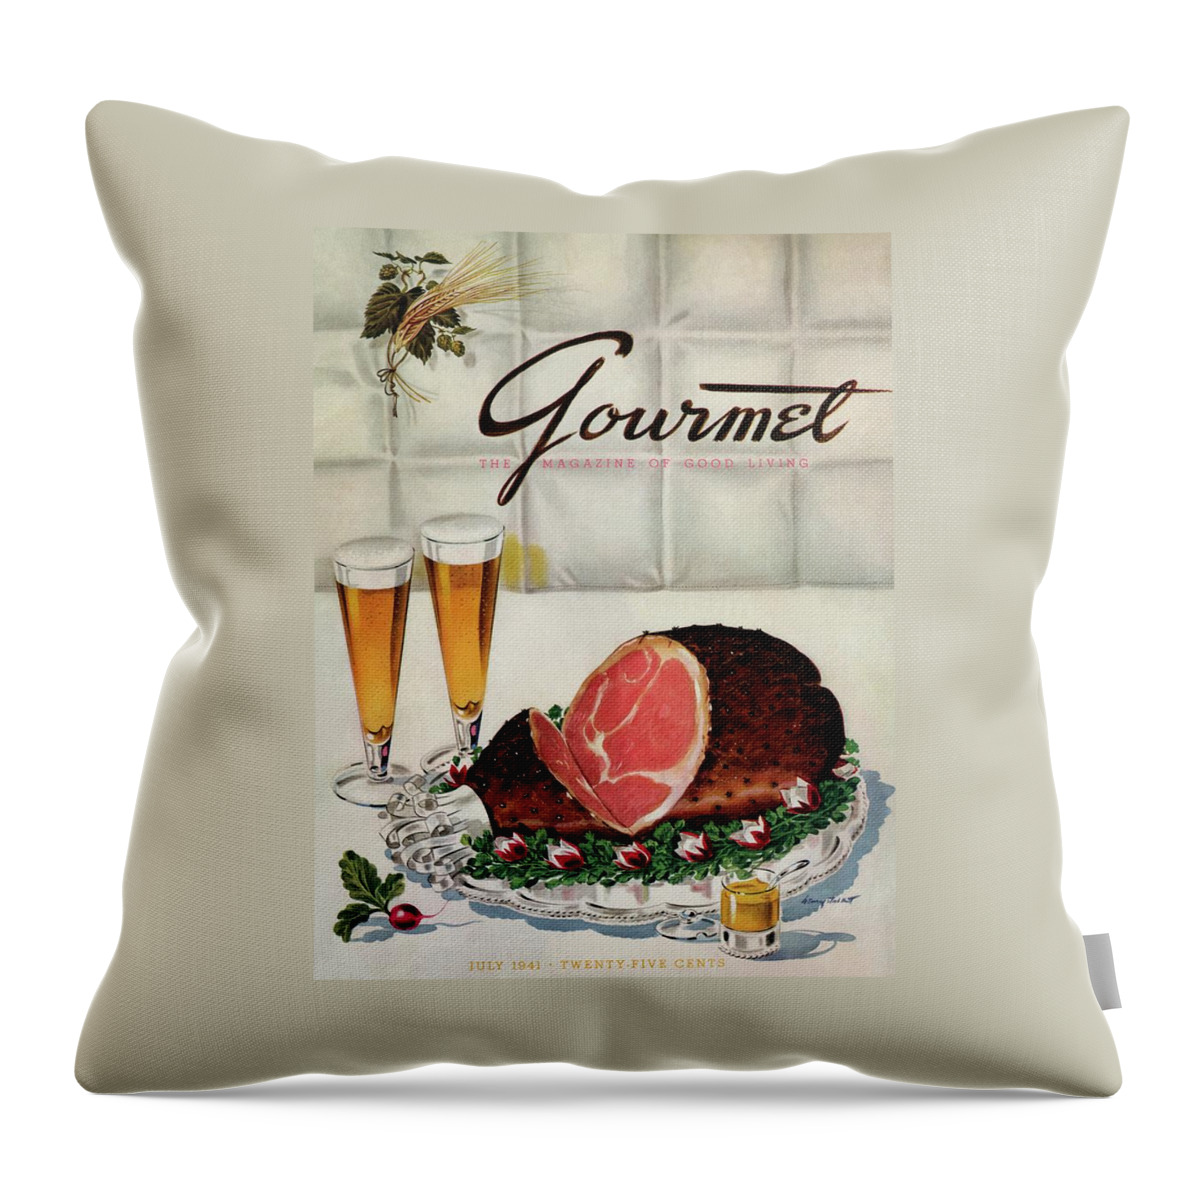 A Gourmet Cover Of Ham Throw Pillow